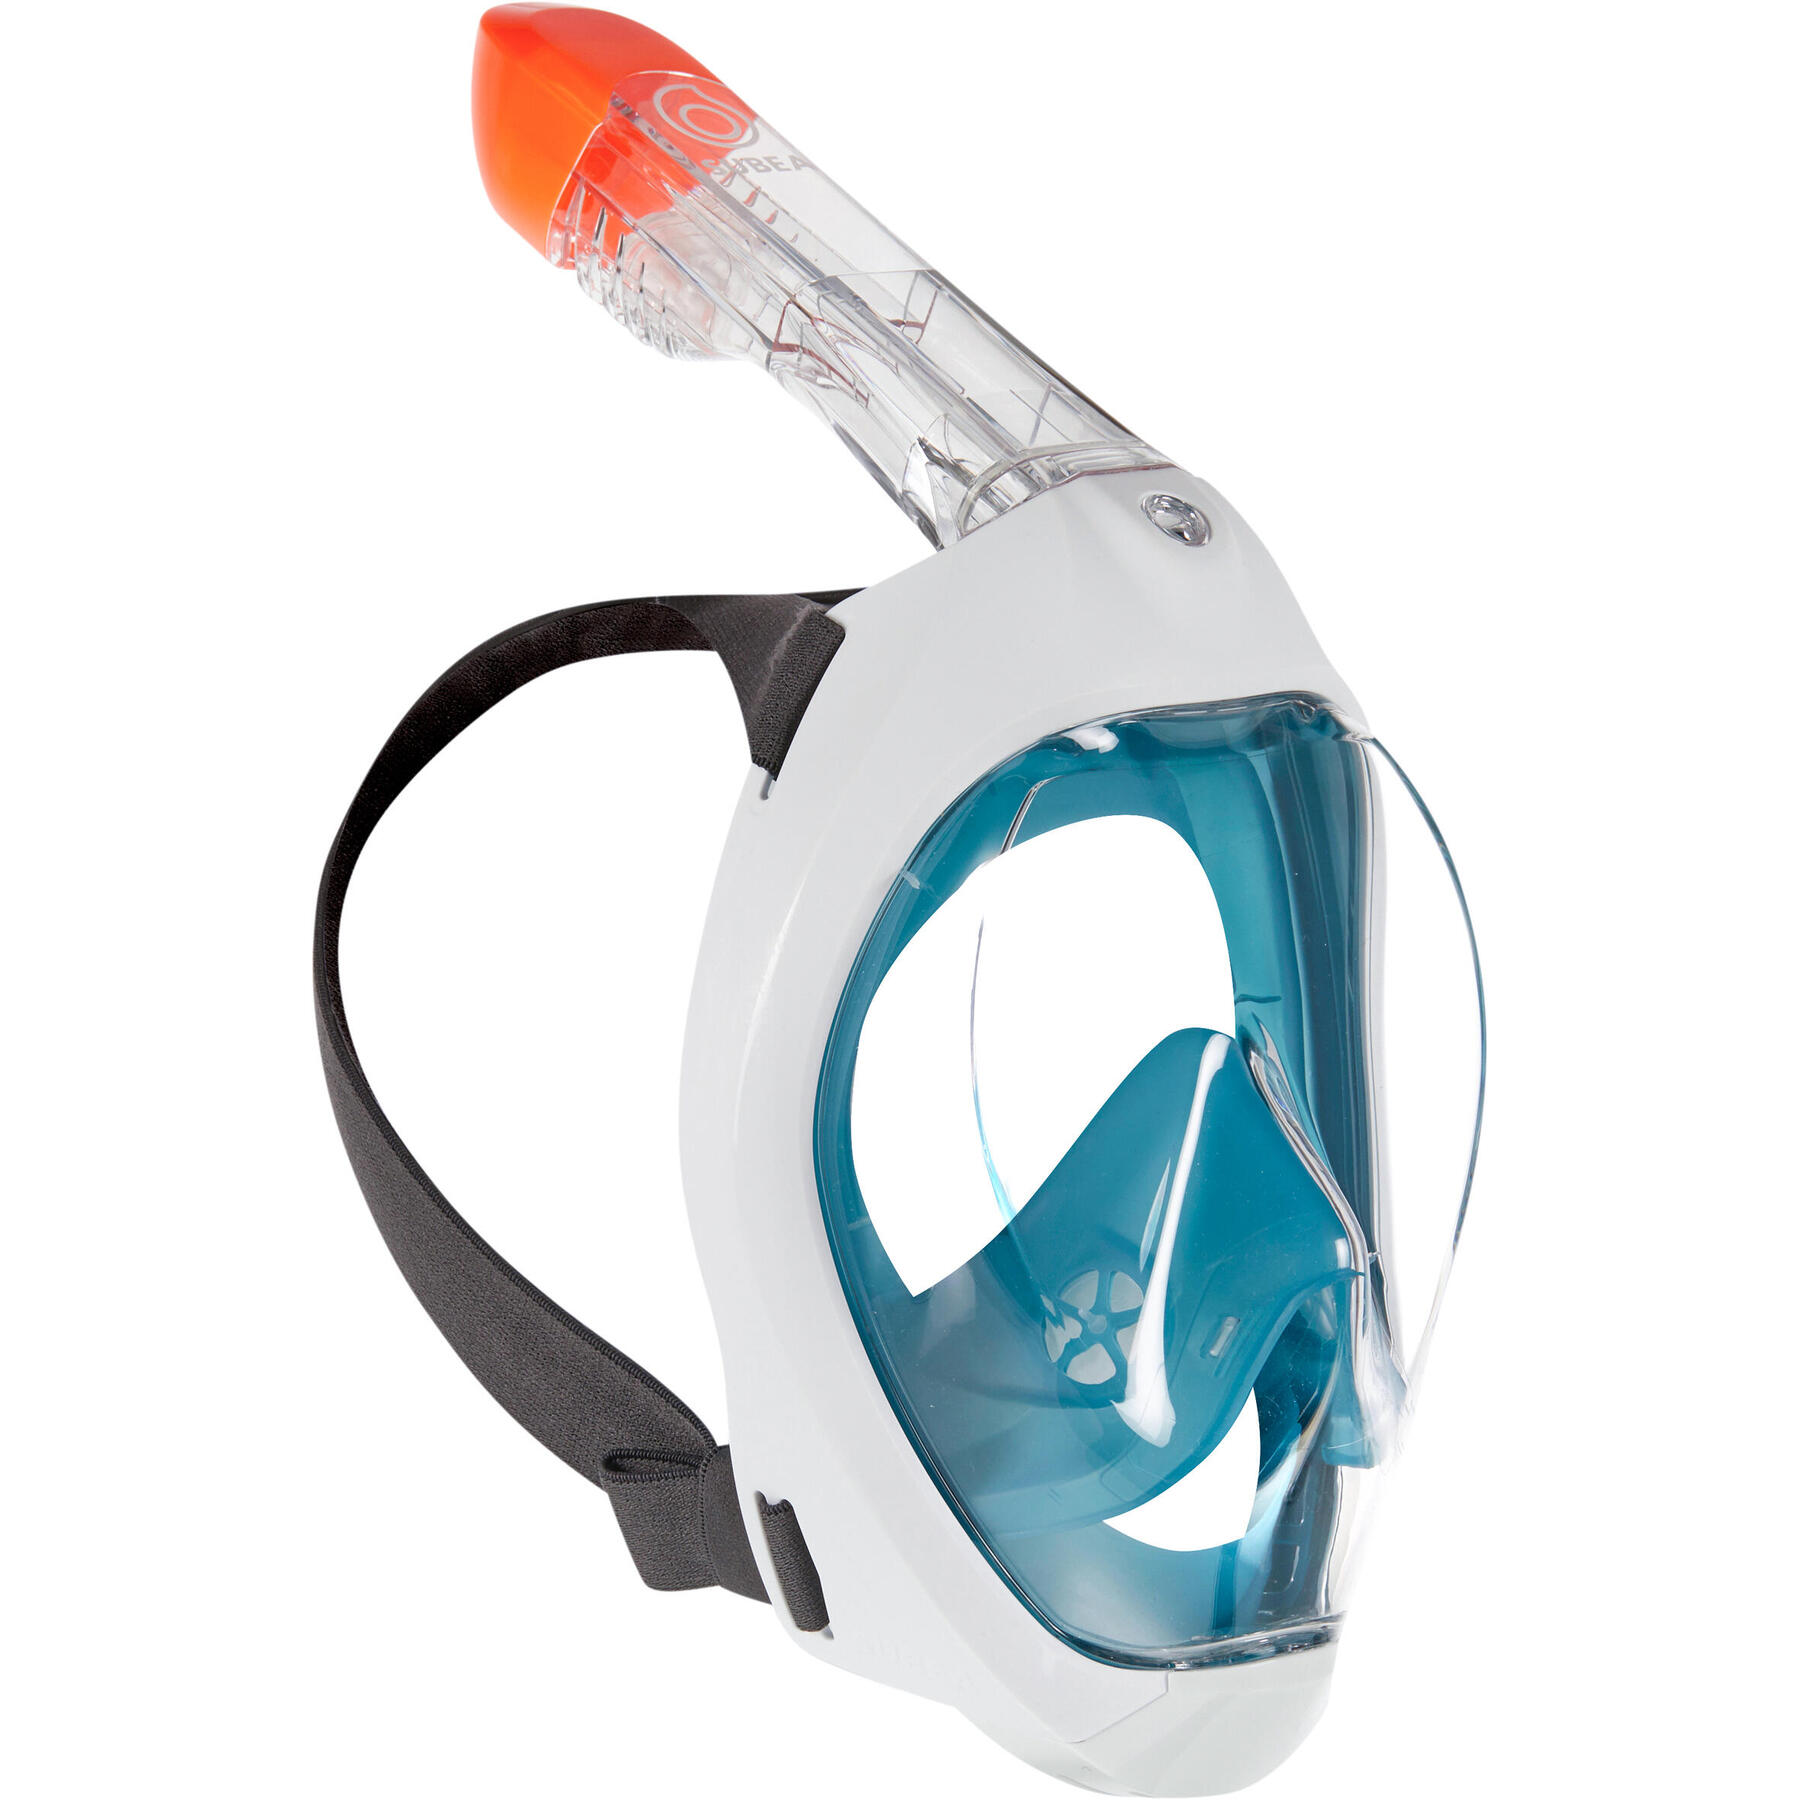 conseil choisir masque snorkeling easybreath subea 